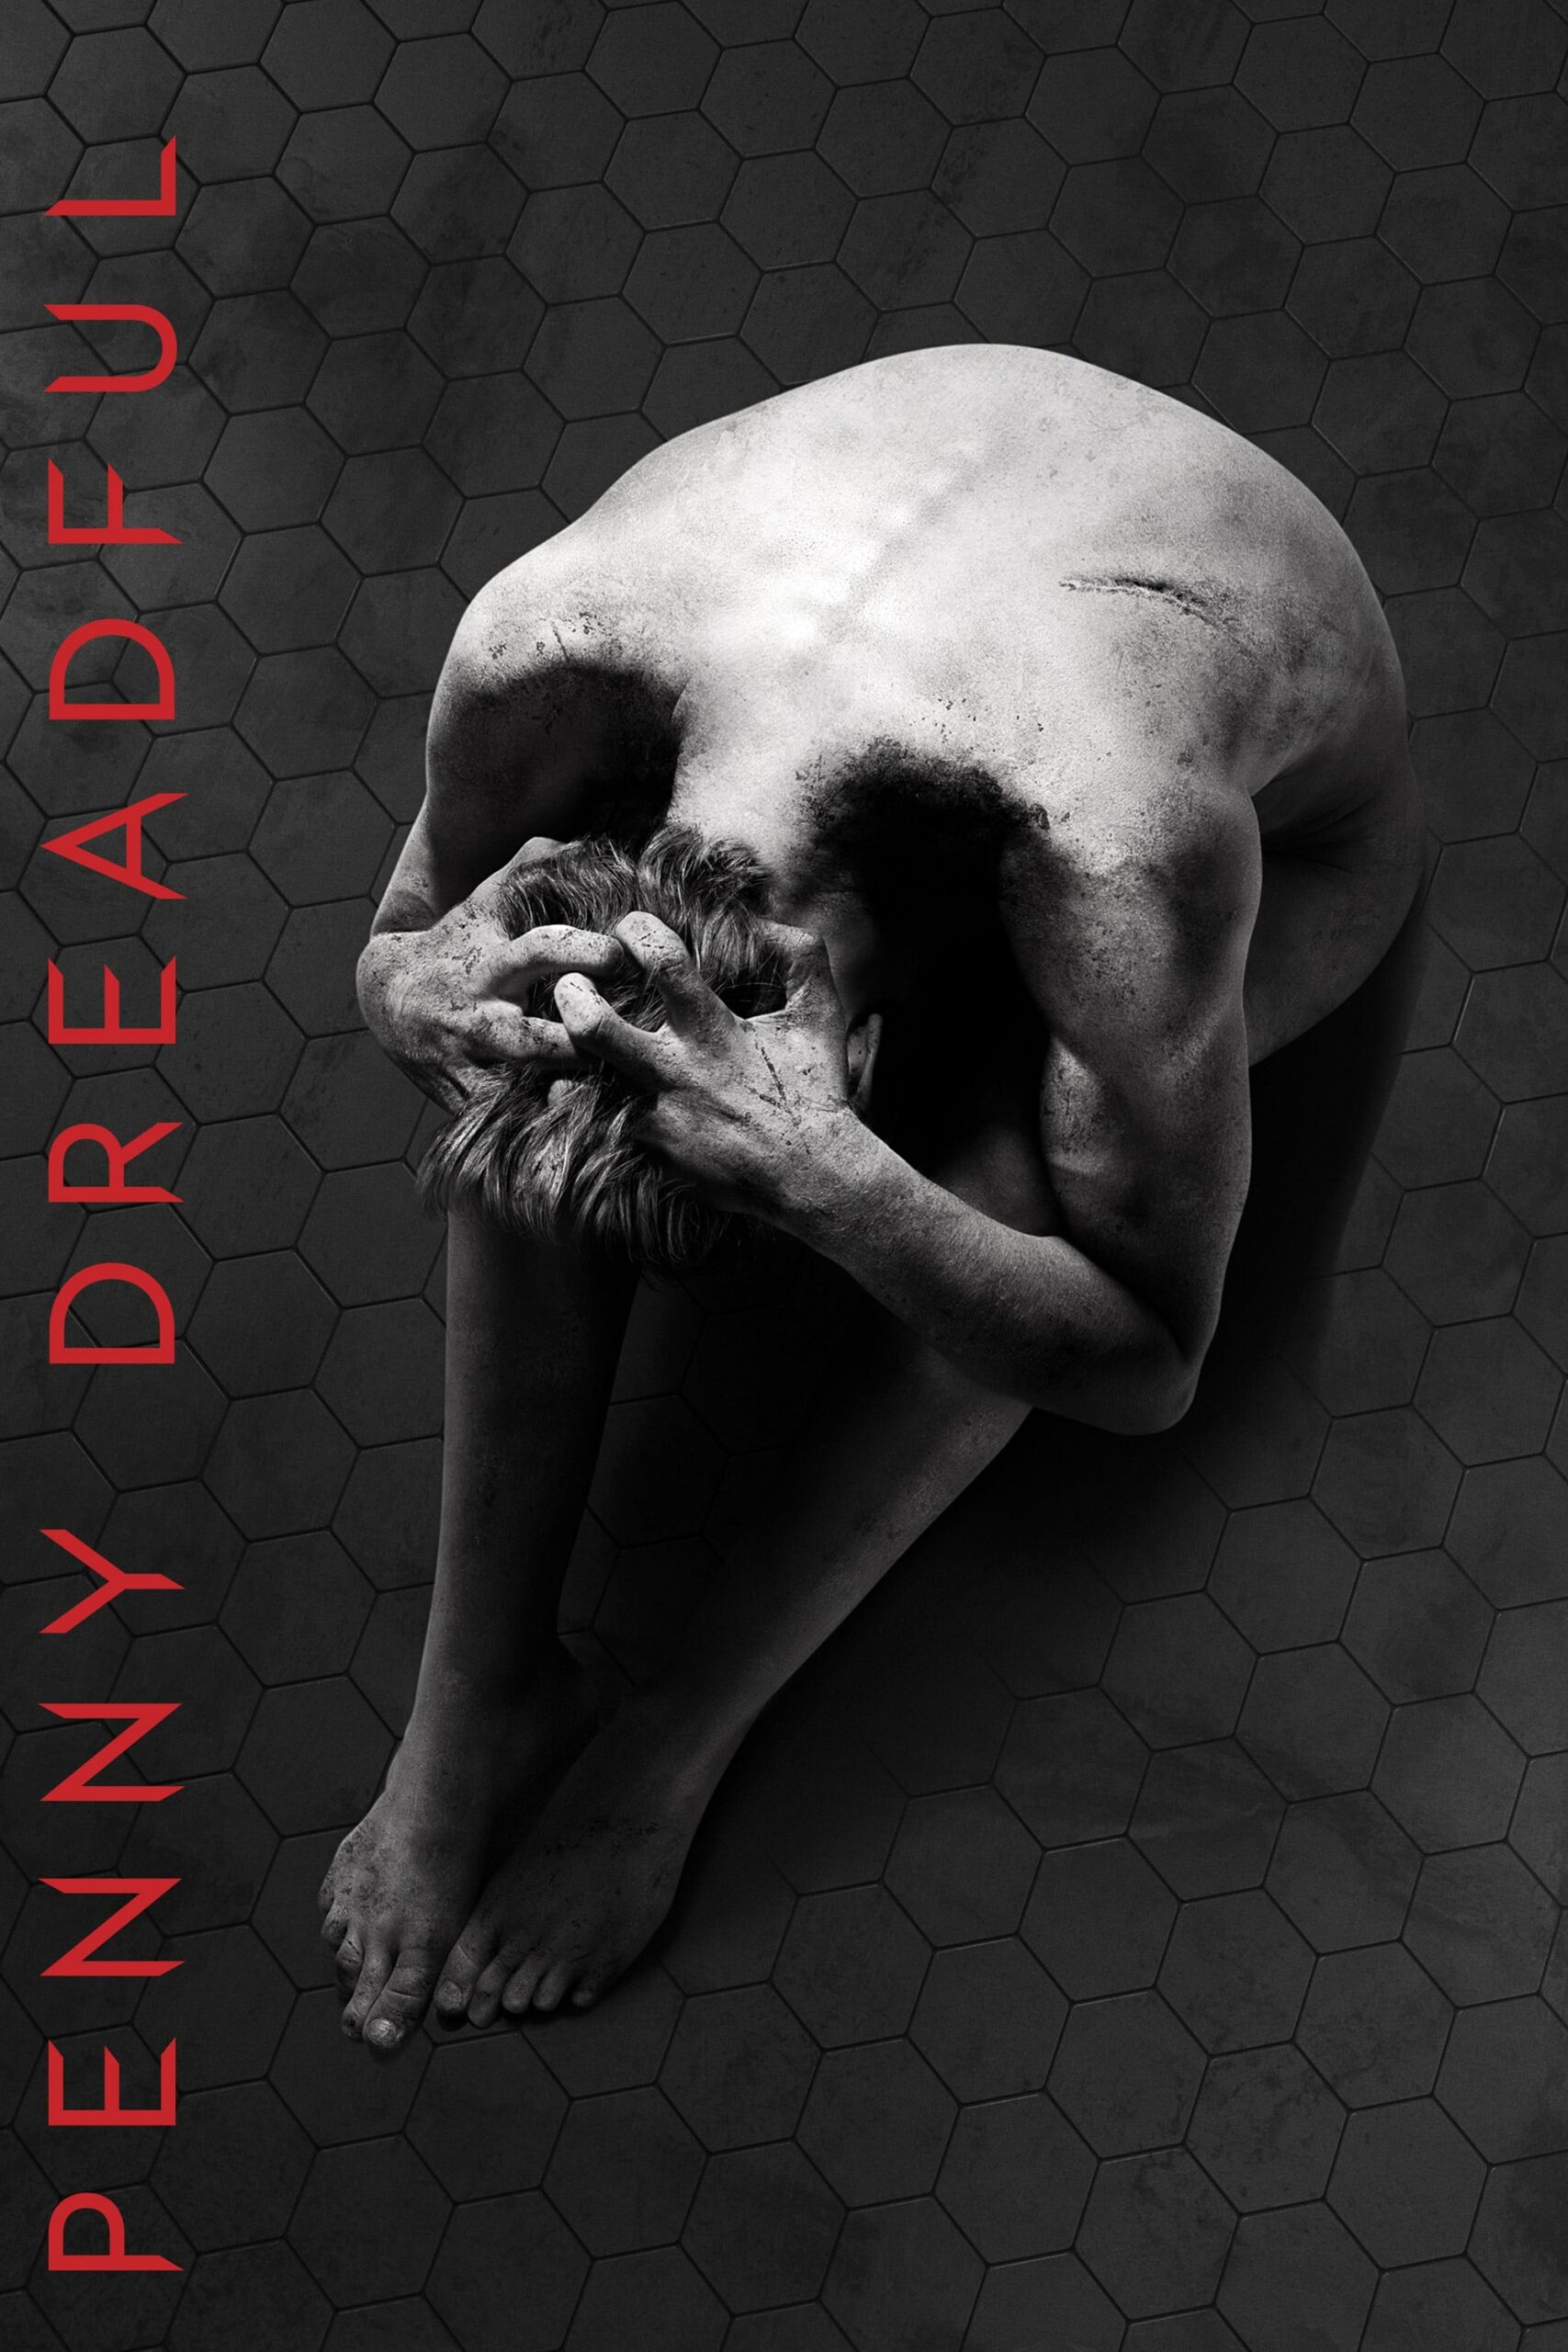 Plakát pro film “Penny Dreadful”